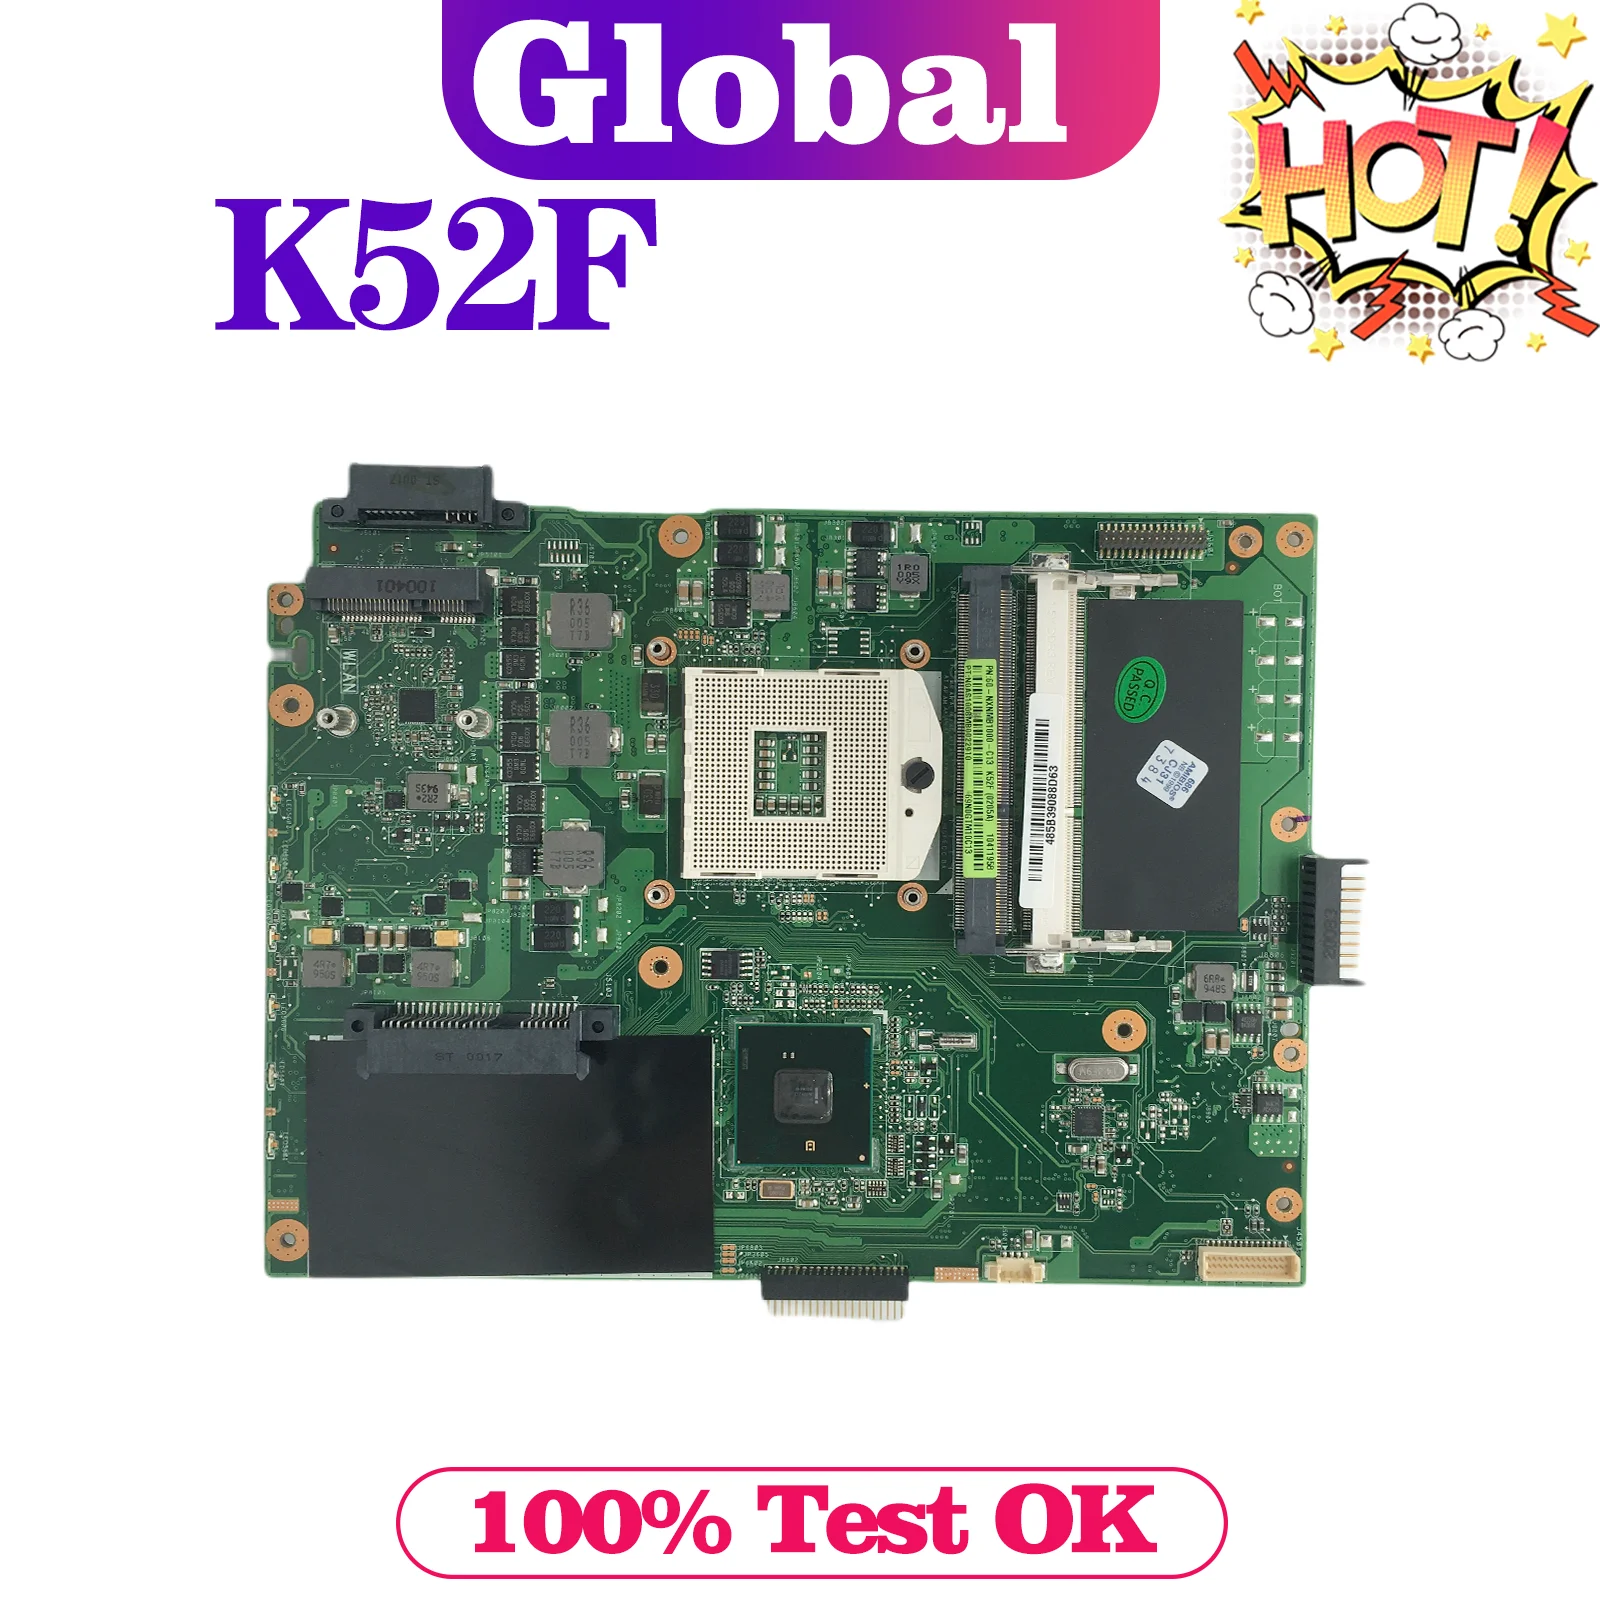 KEFU K52F Mainboard For ASUS K52F X52F A52F Laptop Motherboard REV:2.0 DDR3 PGA989 MAIN BOARD TEST OK